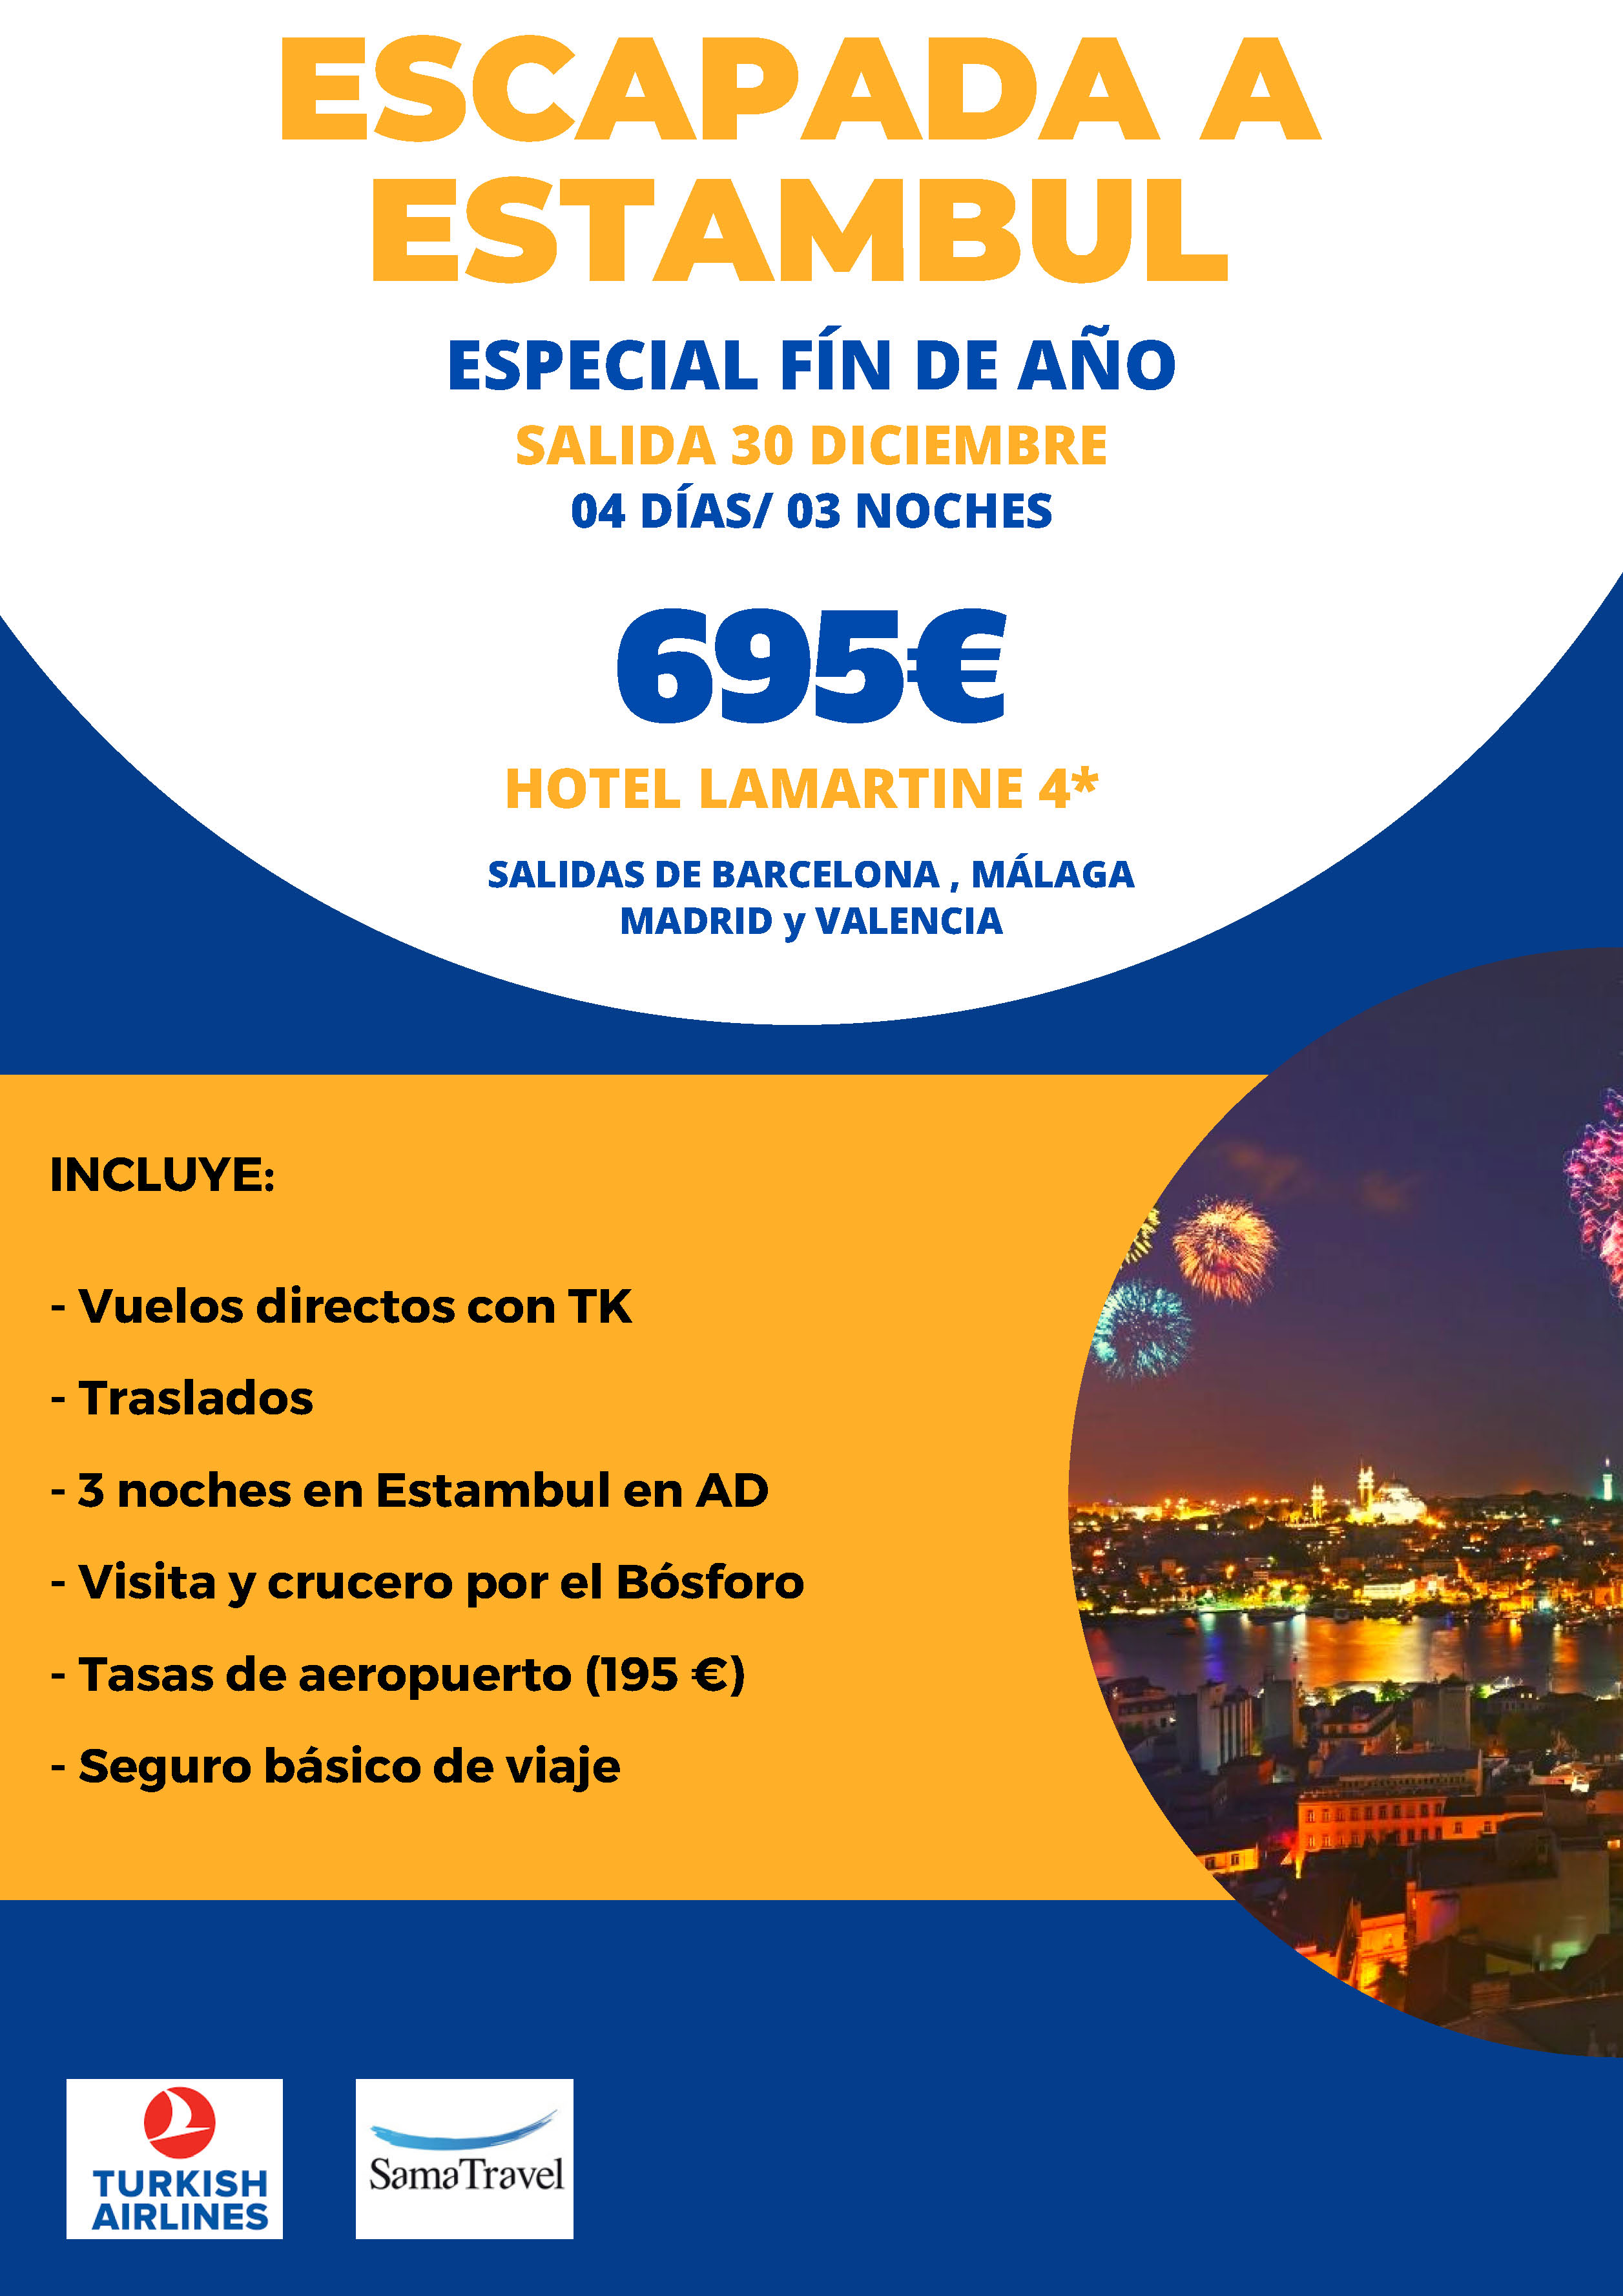 Oferta Sama Travel Escapada a Estambul Fin de Año 2022 4 dias salidas 30 diciembre desde Madrid Barcelona Malaga Valencia